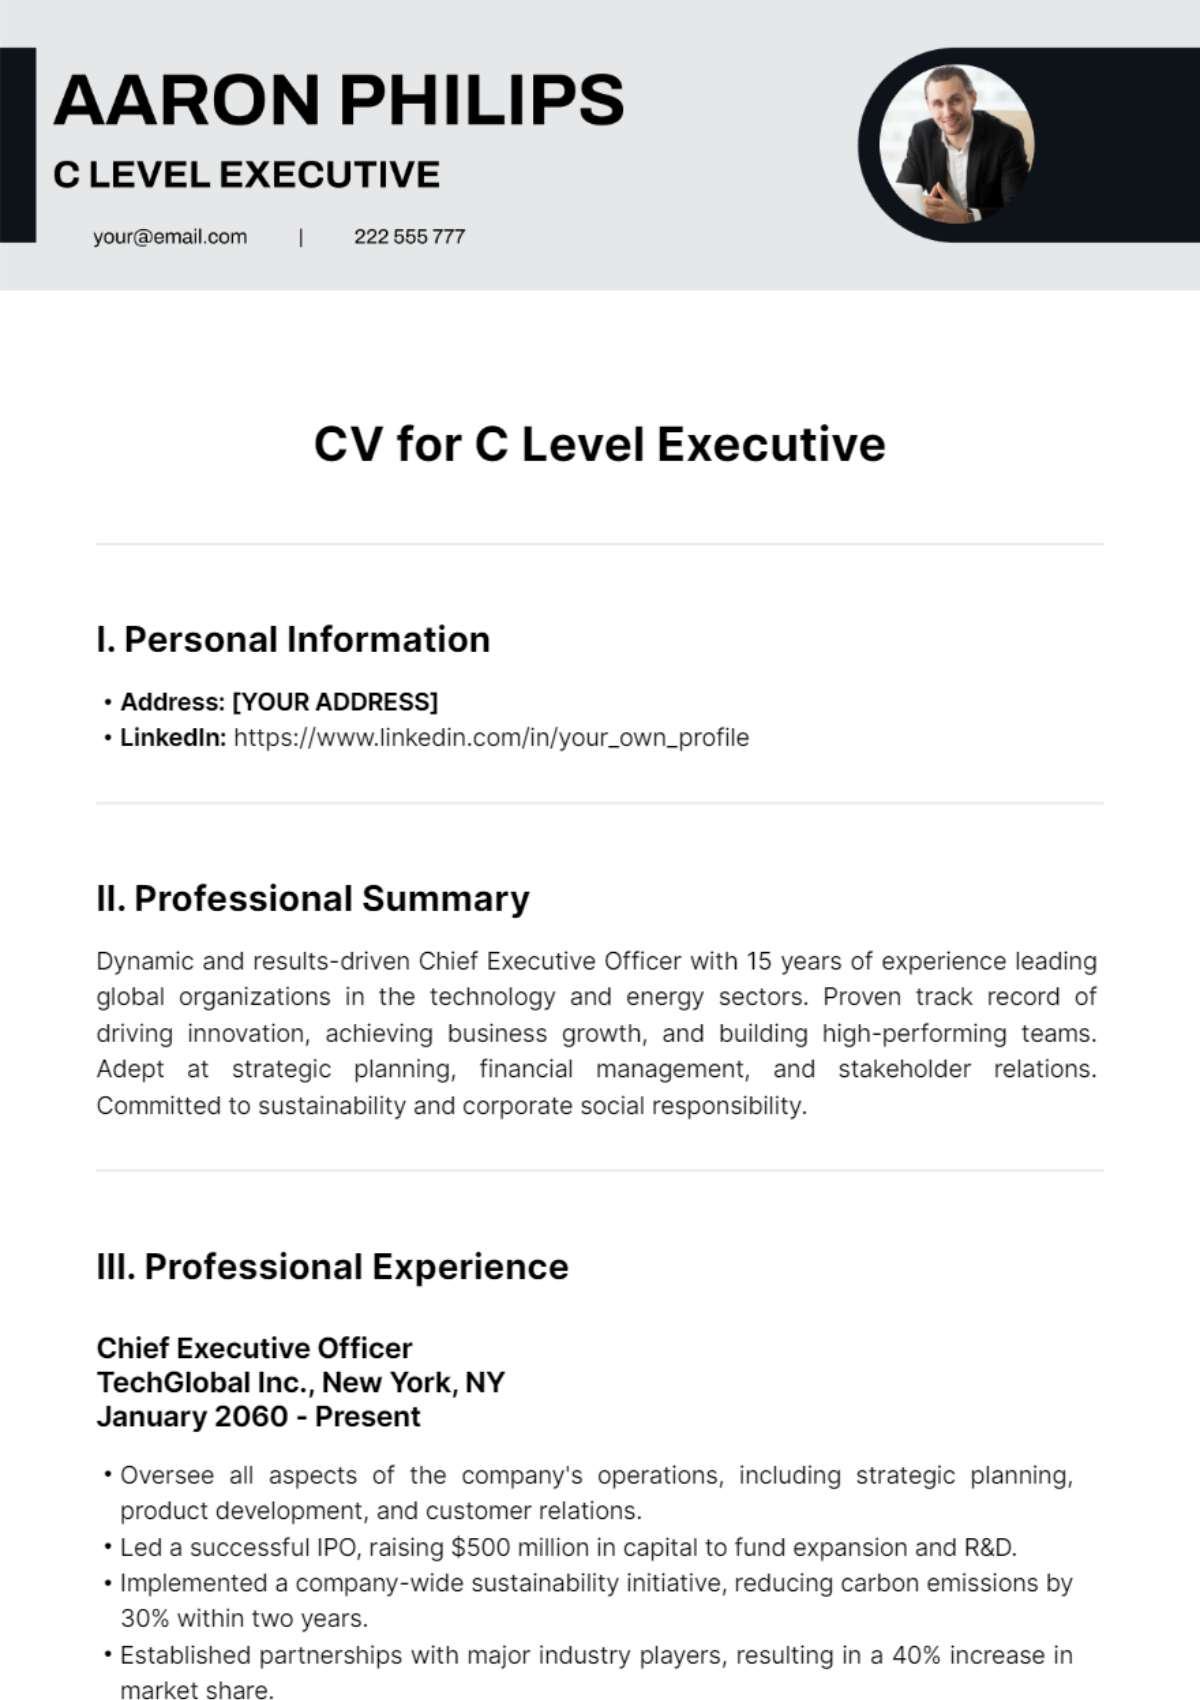 CV for C Level Executive Template